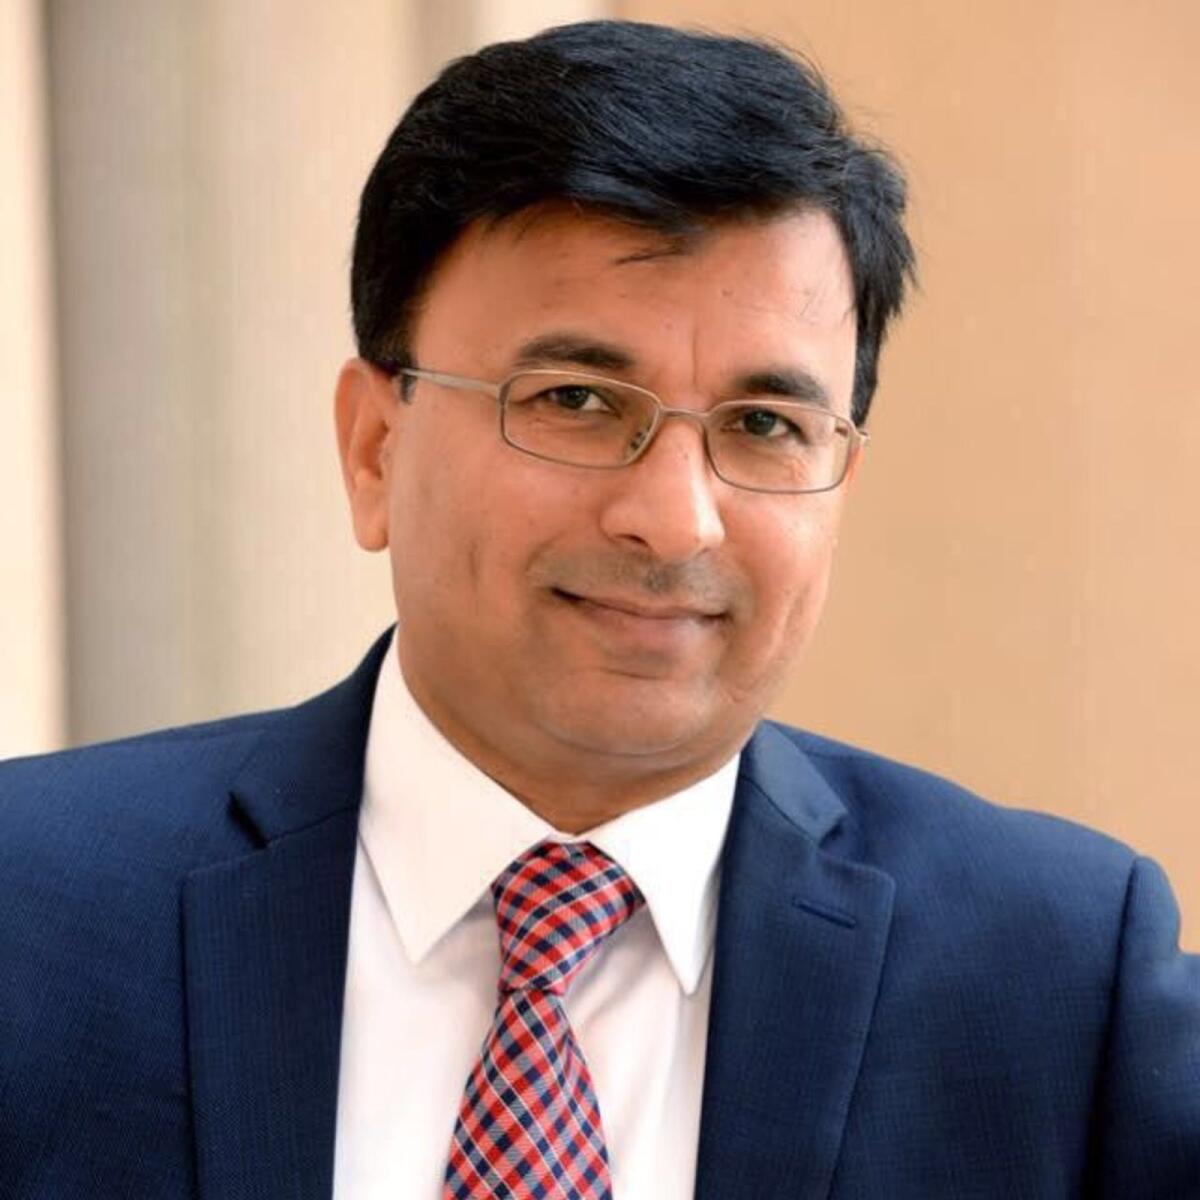 Iftikhar Hamdani, area general manager for Northern Emirates at Hospitality Management Holding (HMH).